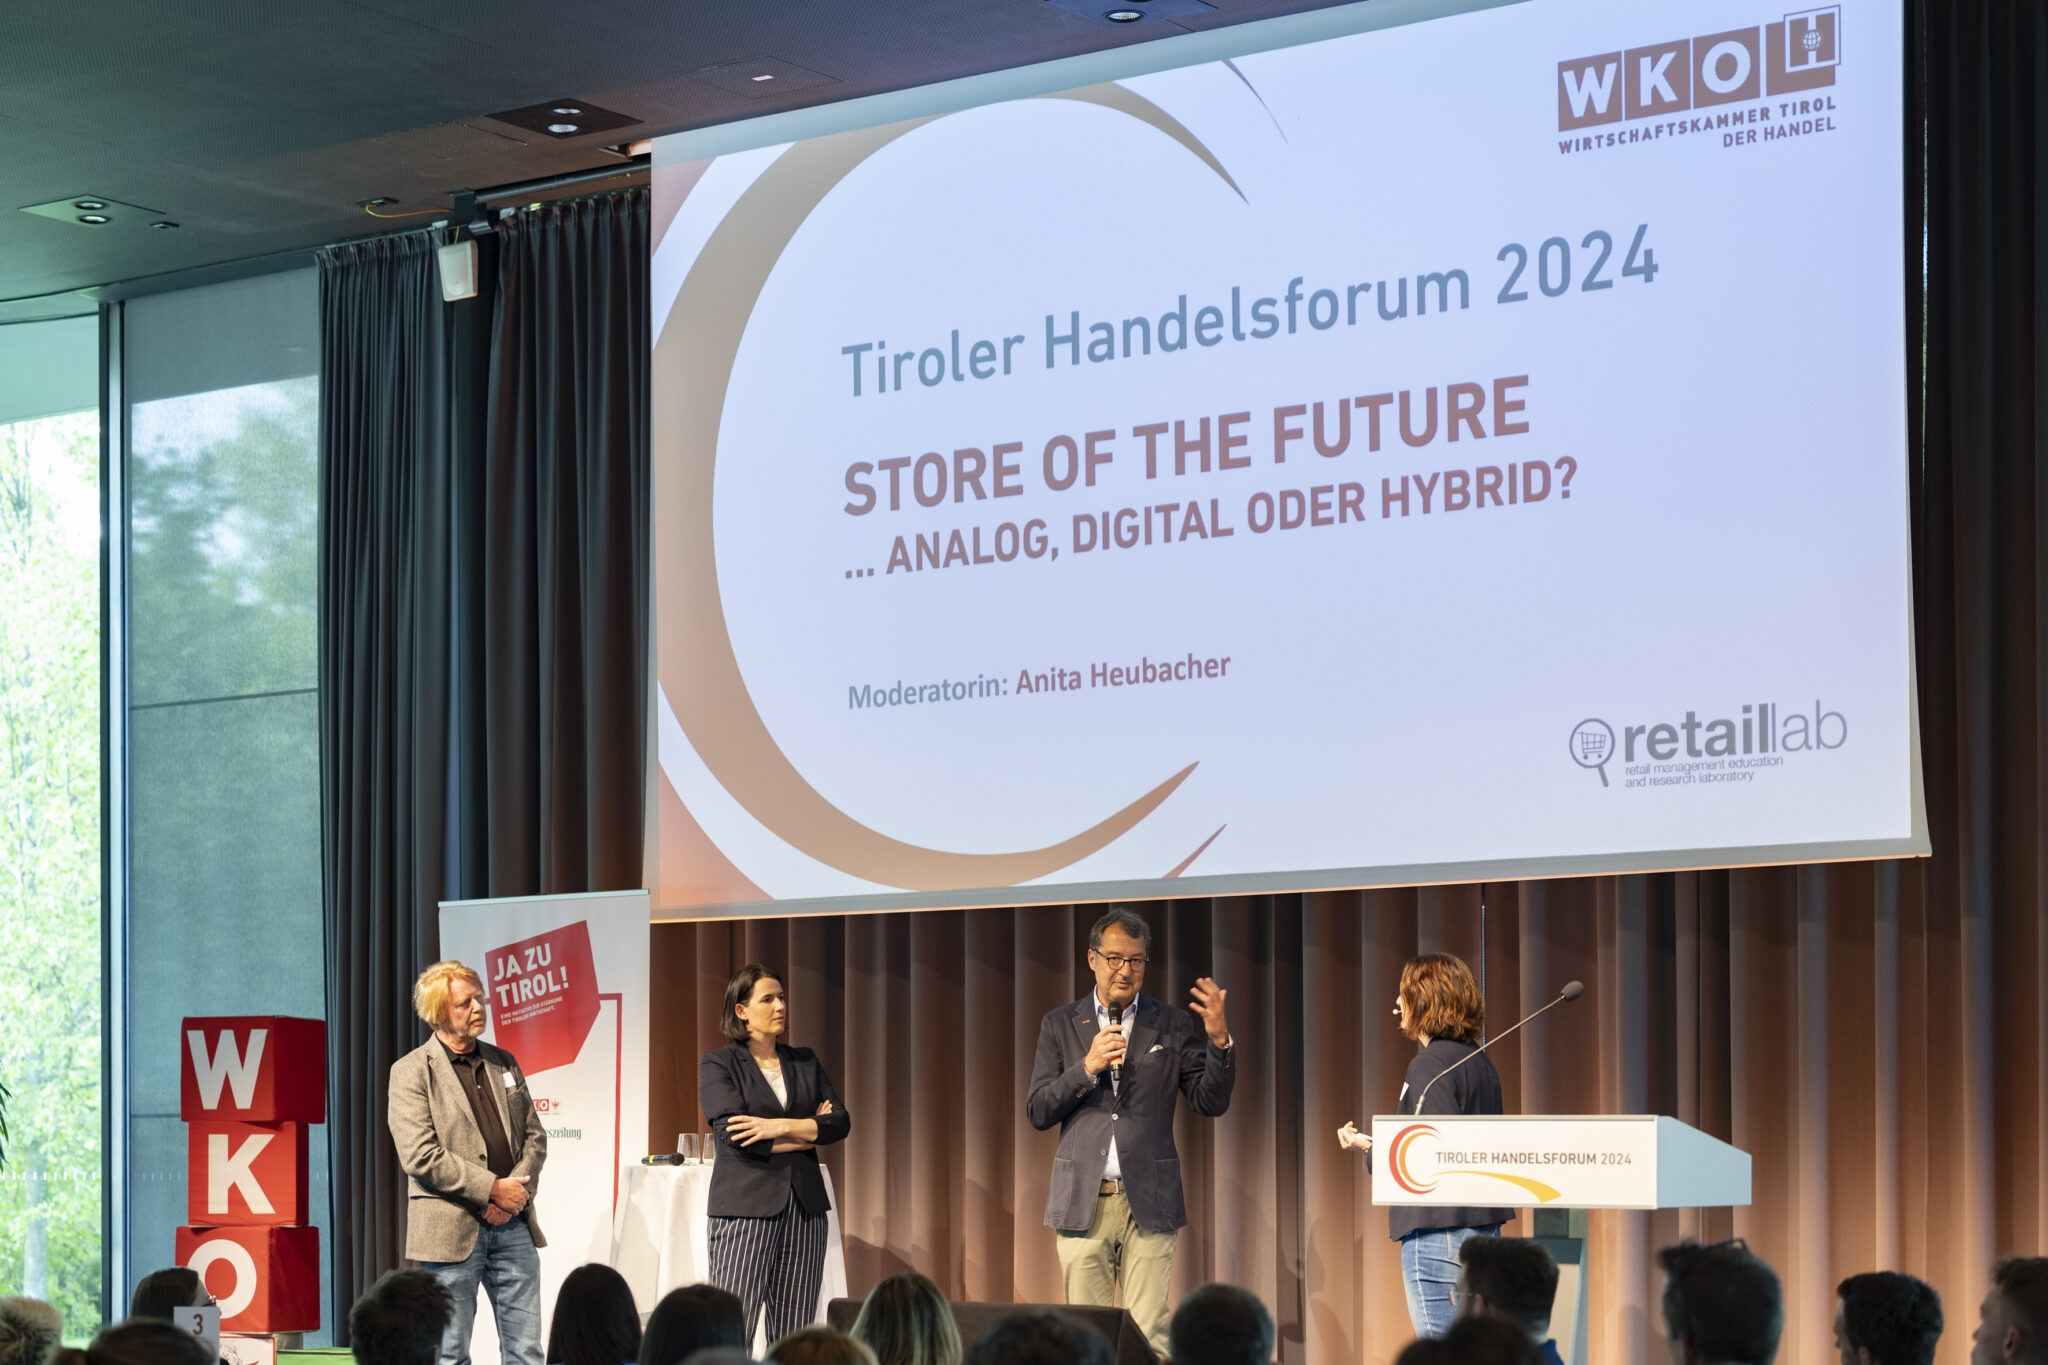 Store of the future – Tiroler Handelsforum 2024